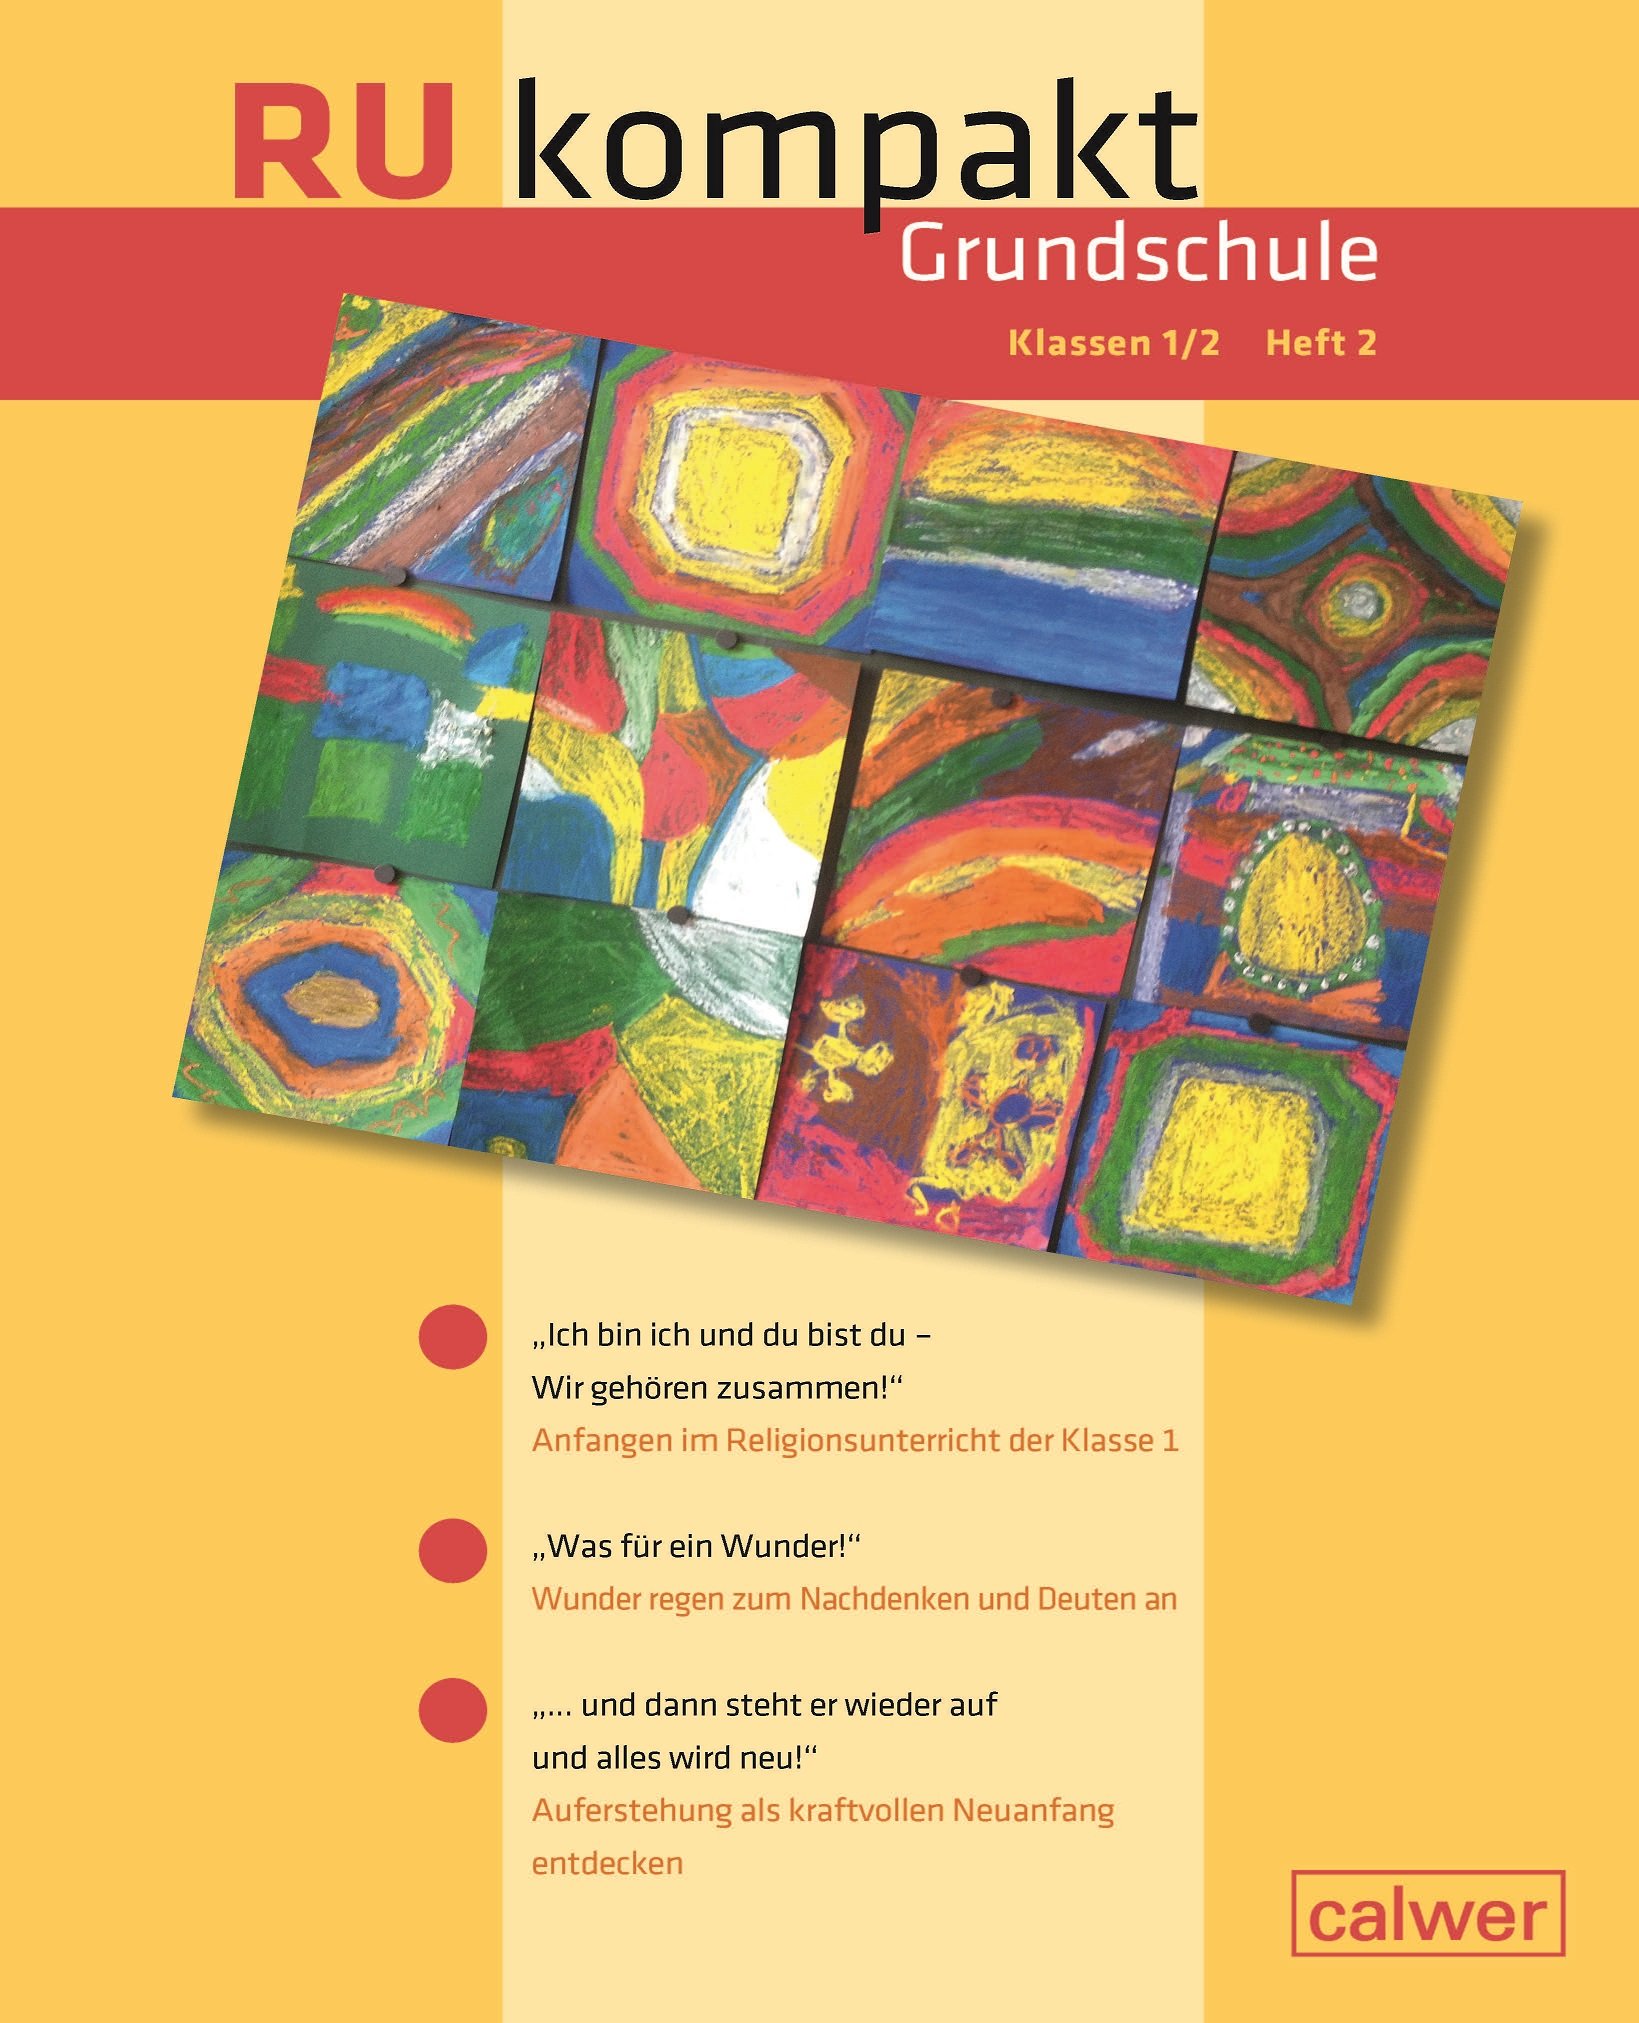 RU kompakt Grundschule Klassen 1/2 Heft 2 - Cover